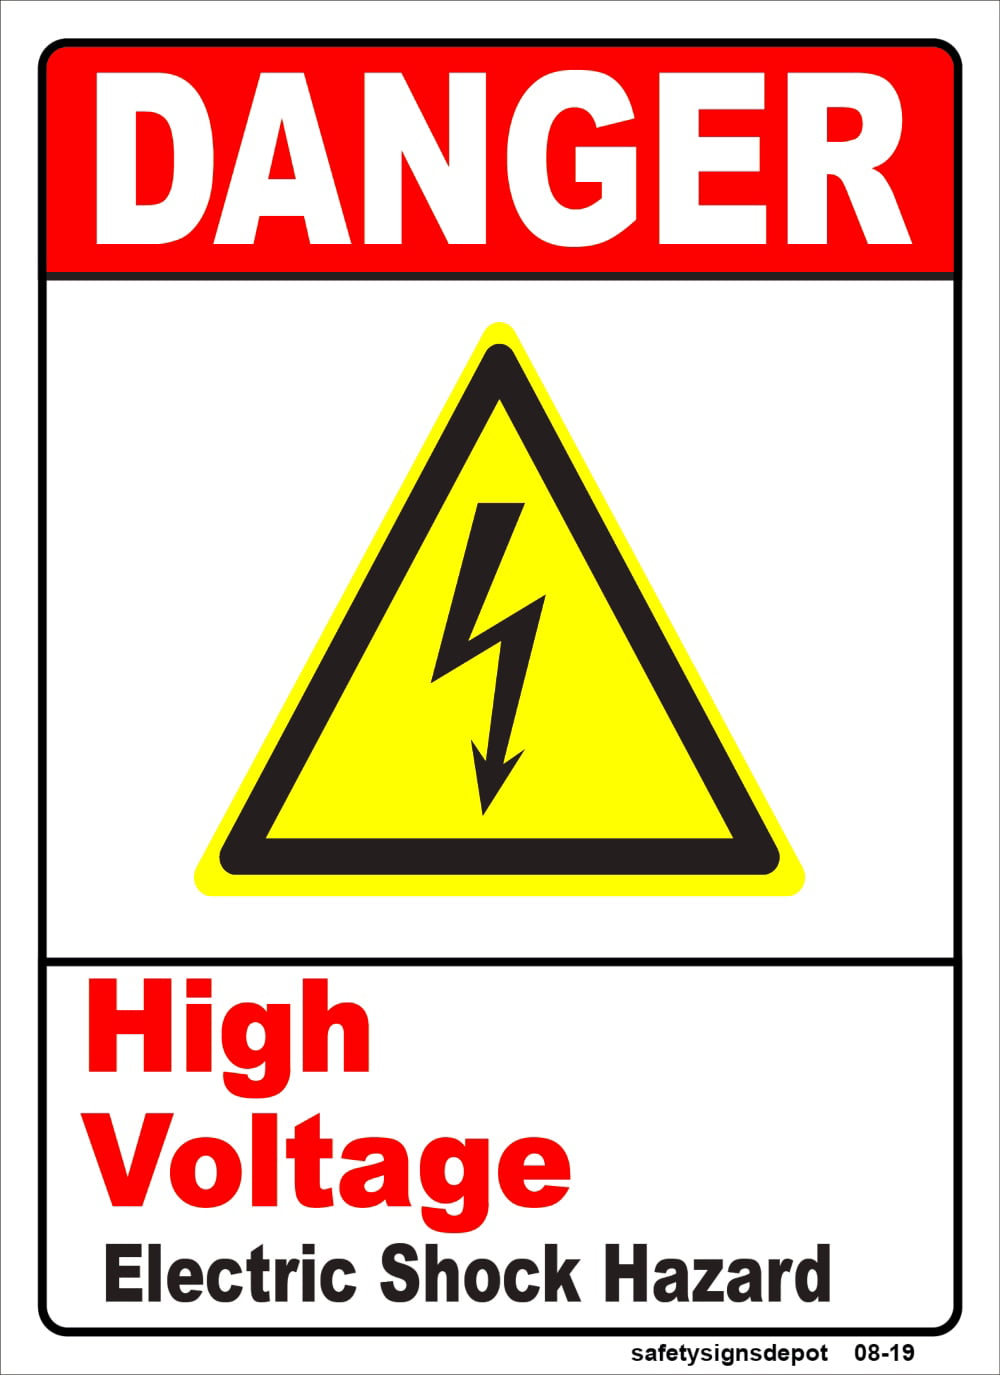 Danger High Voltage Warning Stickers x 6 